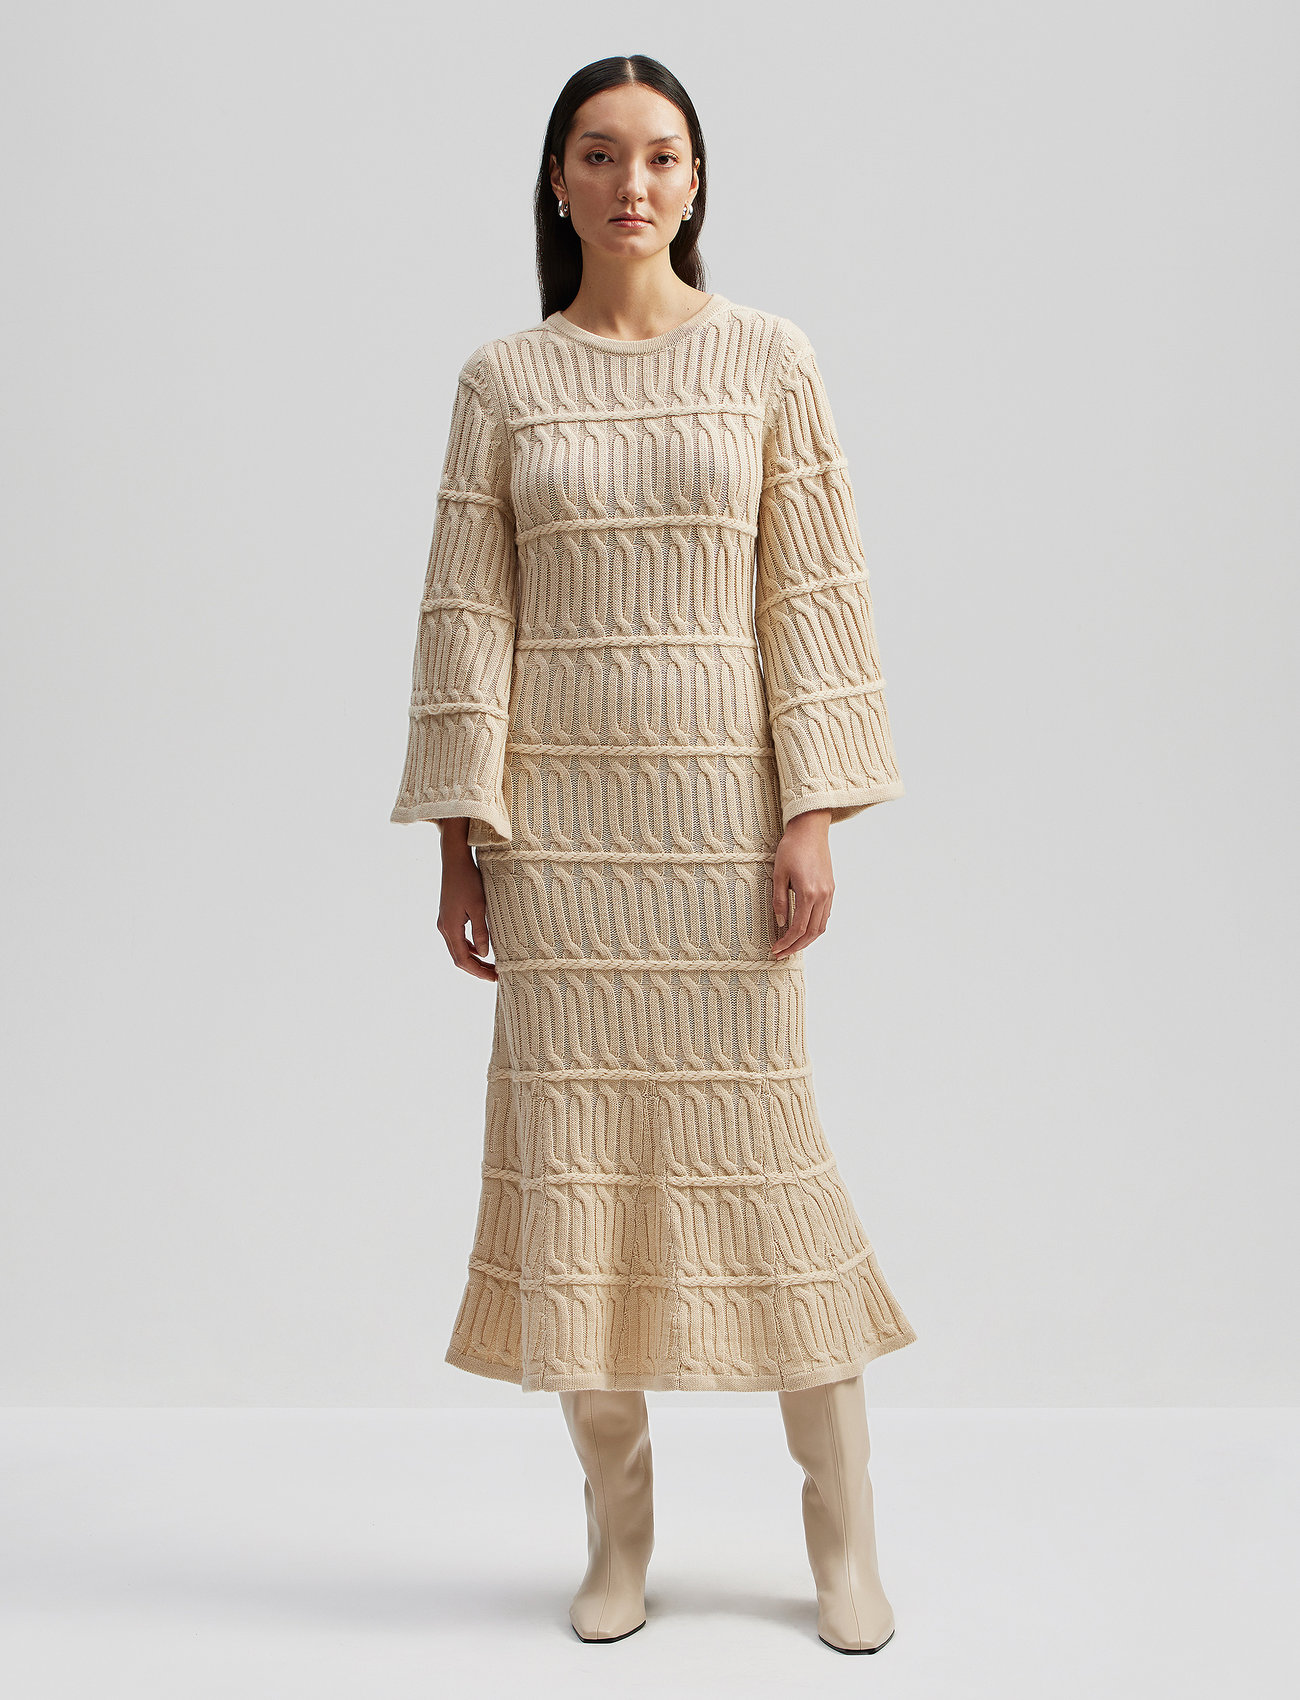 Malina - Elinne cable knitted maxi dress - neulemekot - beige - 1